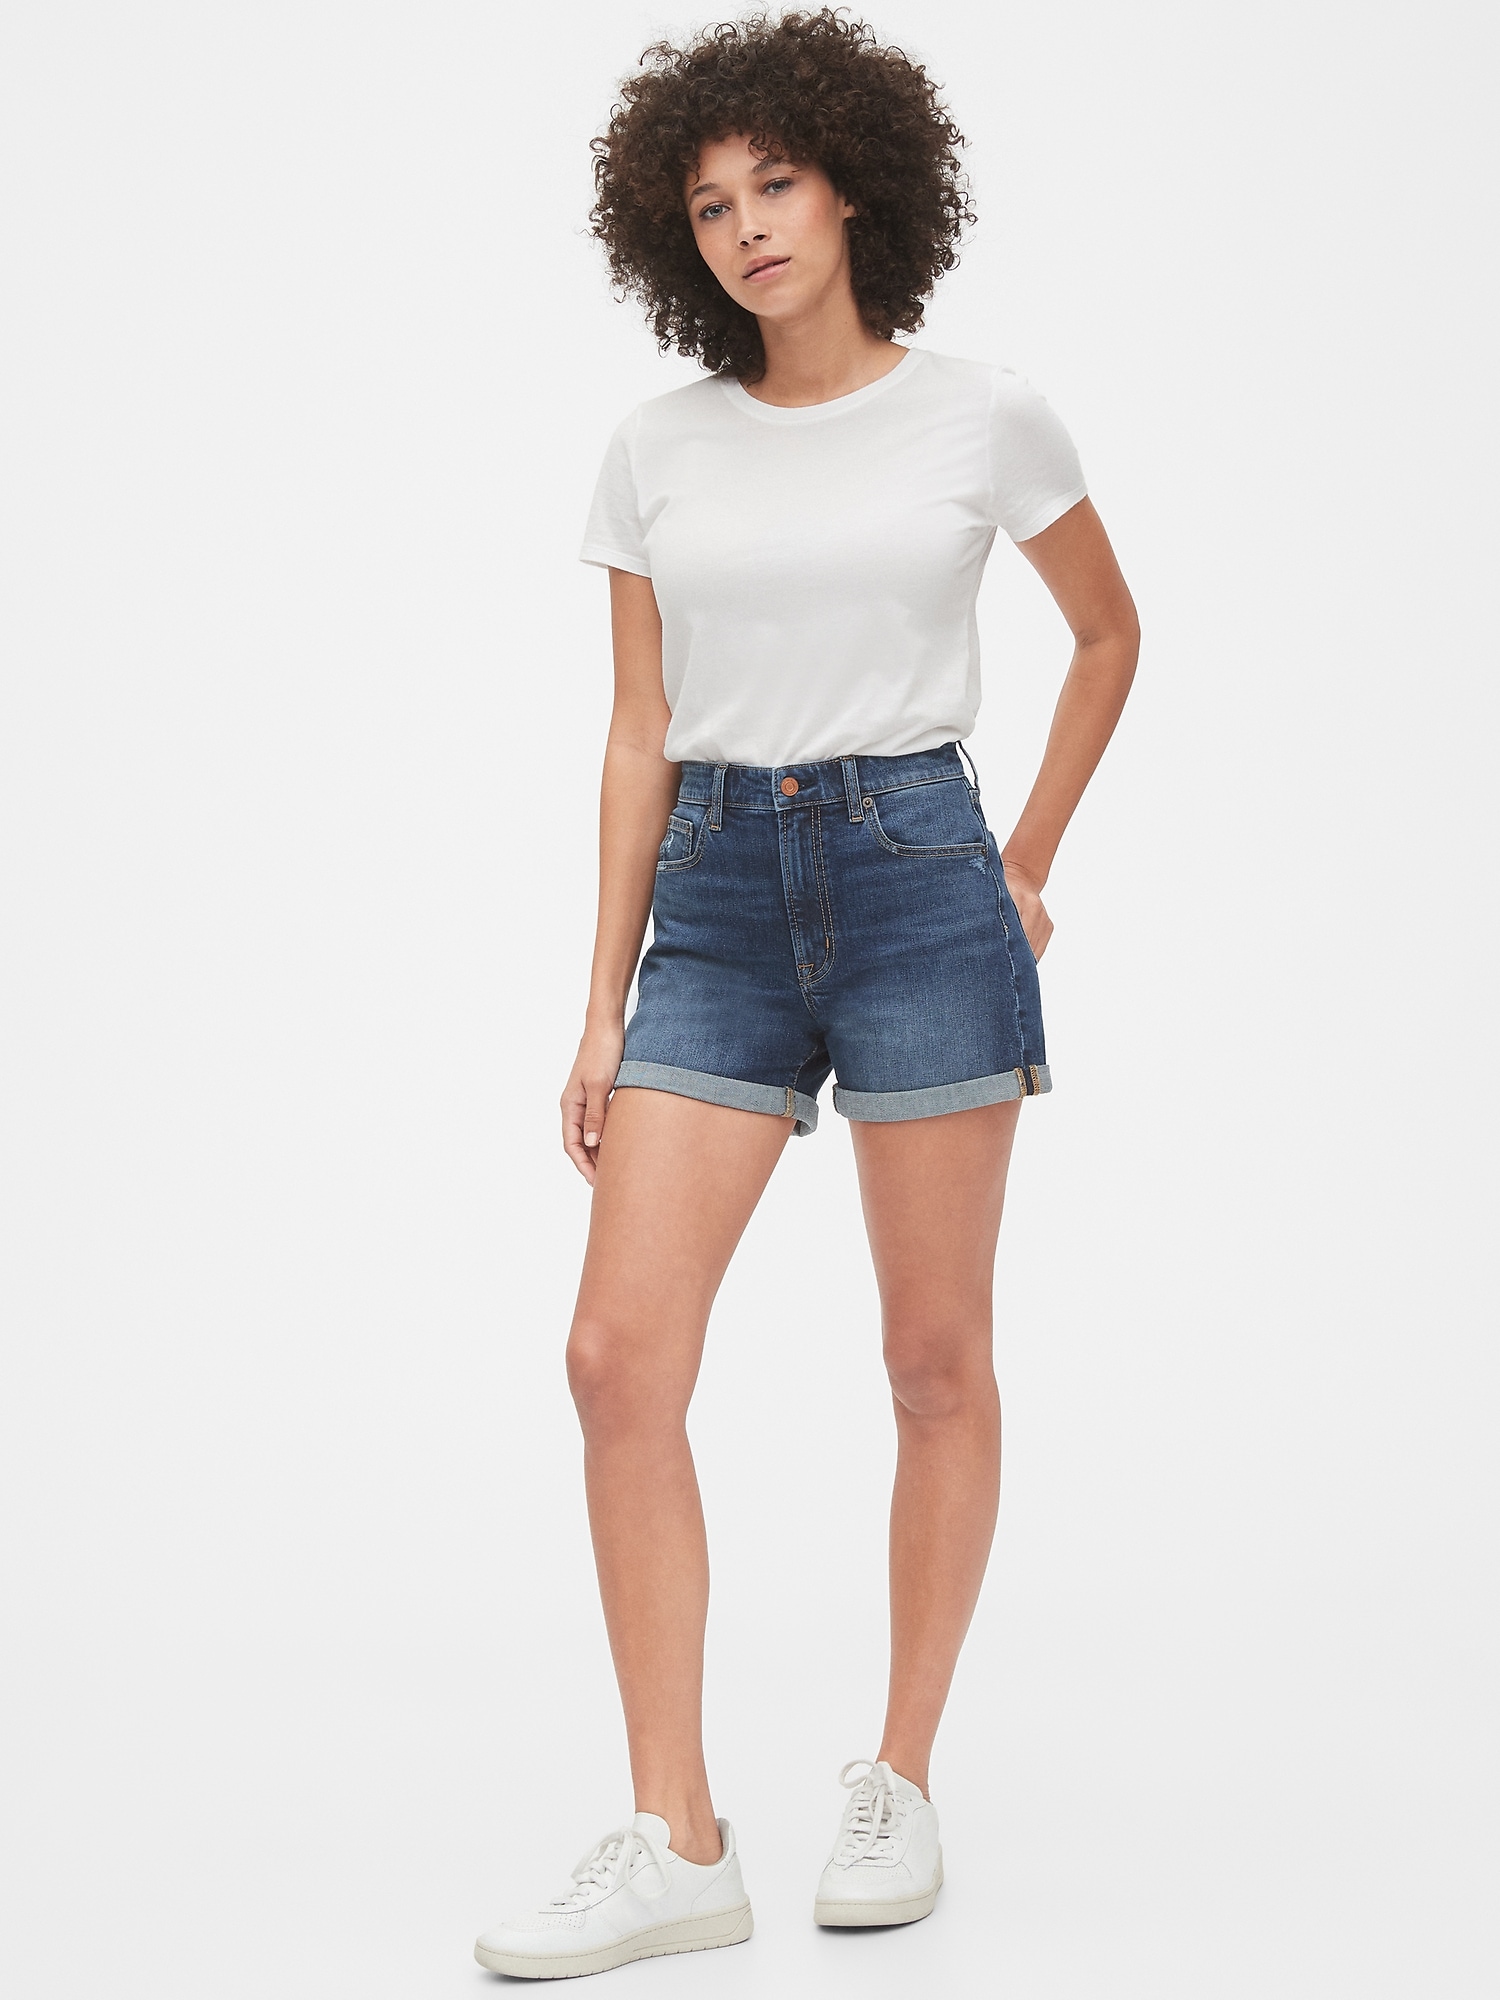 jean shorts for curvy women